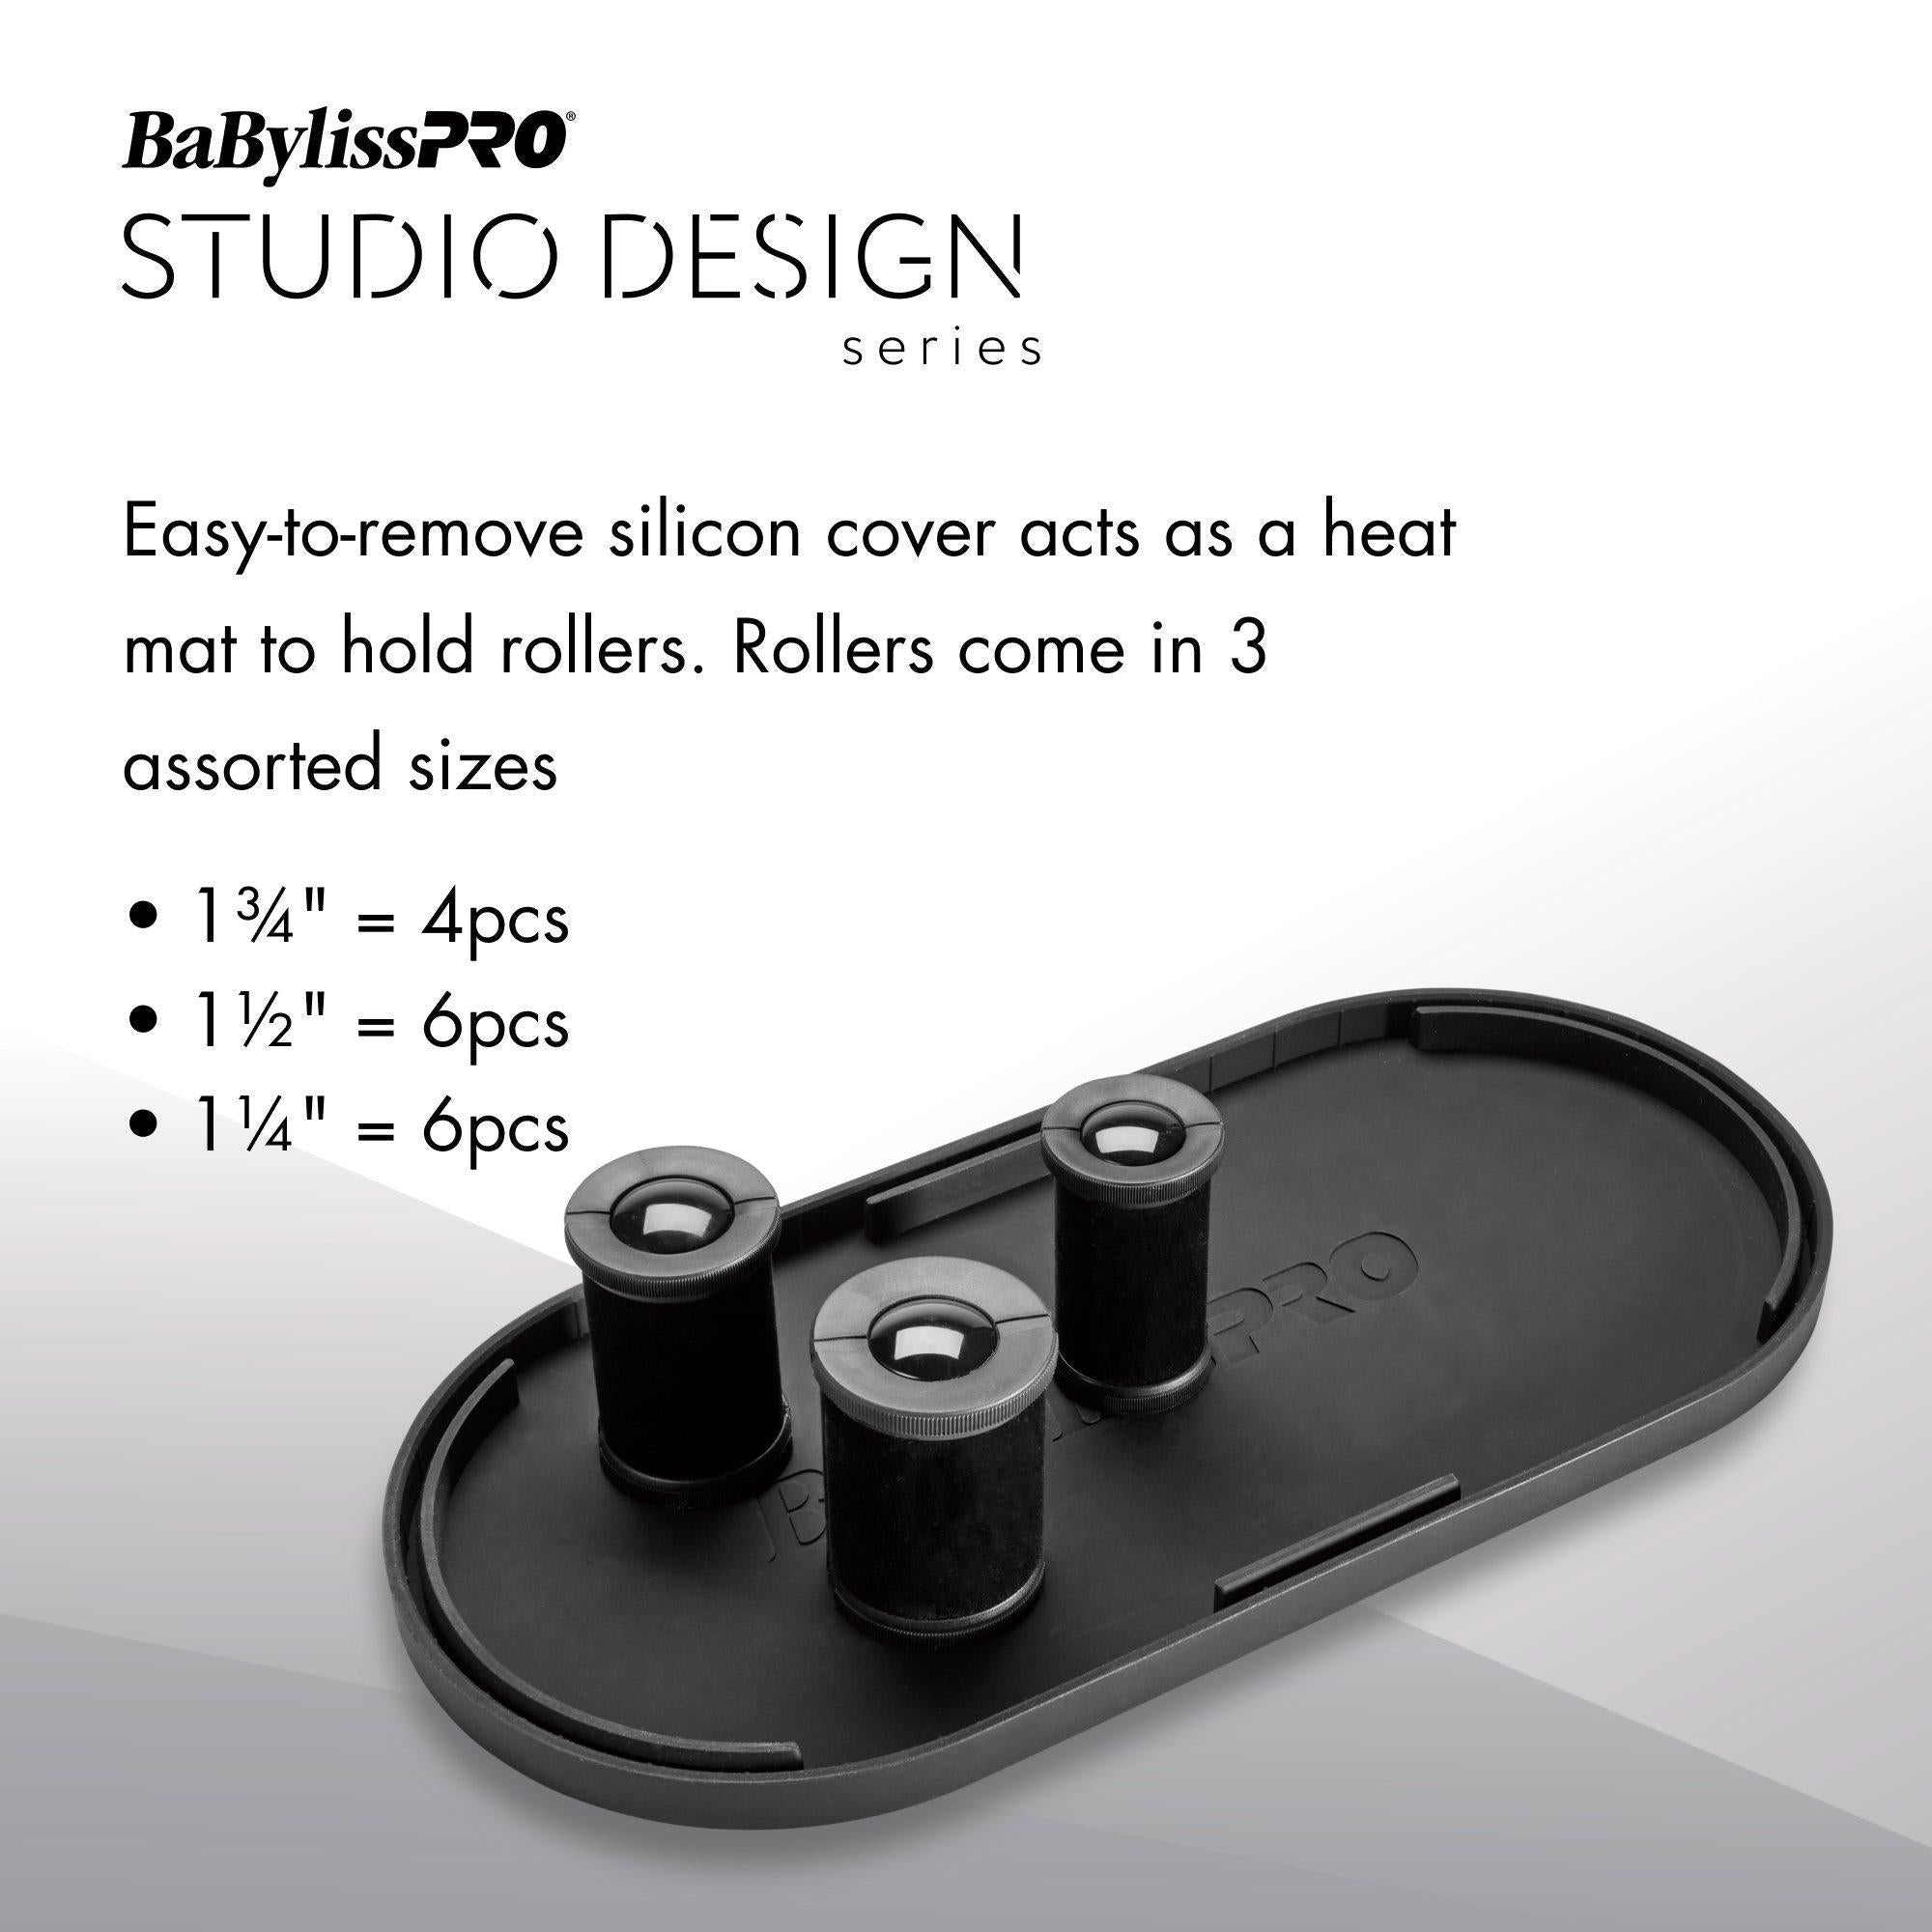 BabylissPRO Studio Design Series Standing Hot Rollers Item No. BCISHRUC